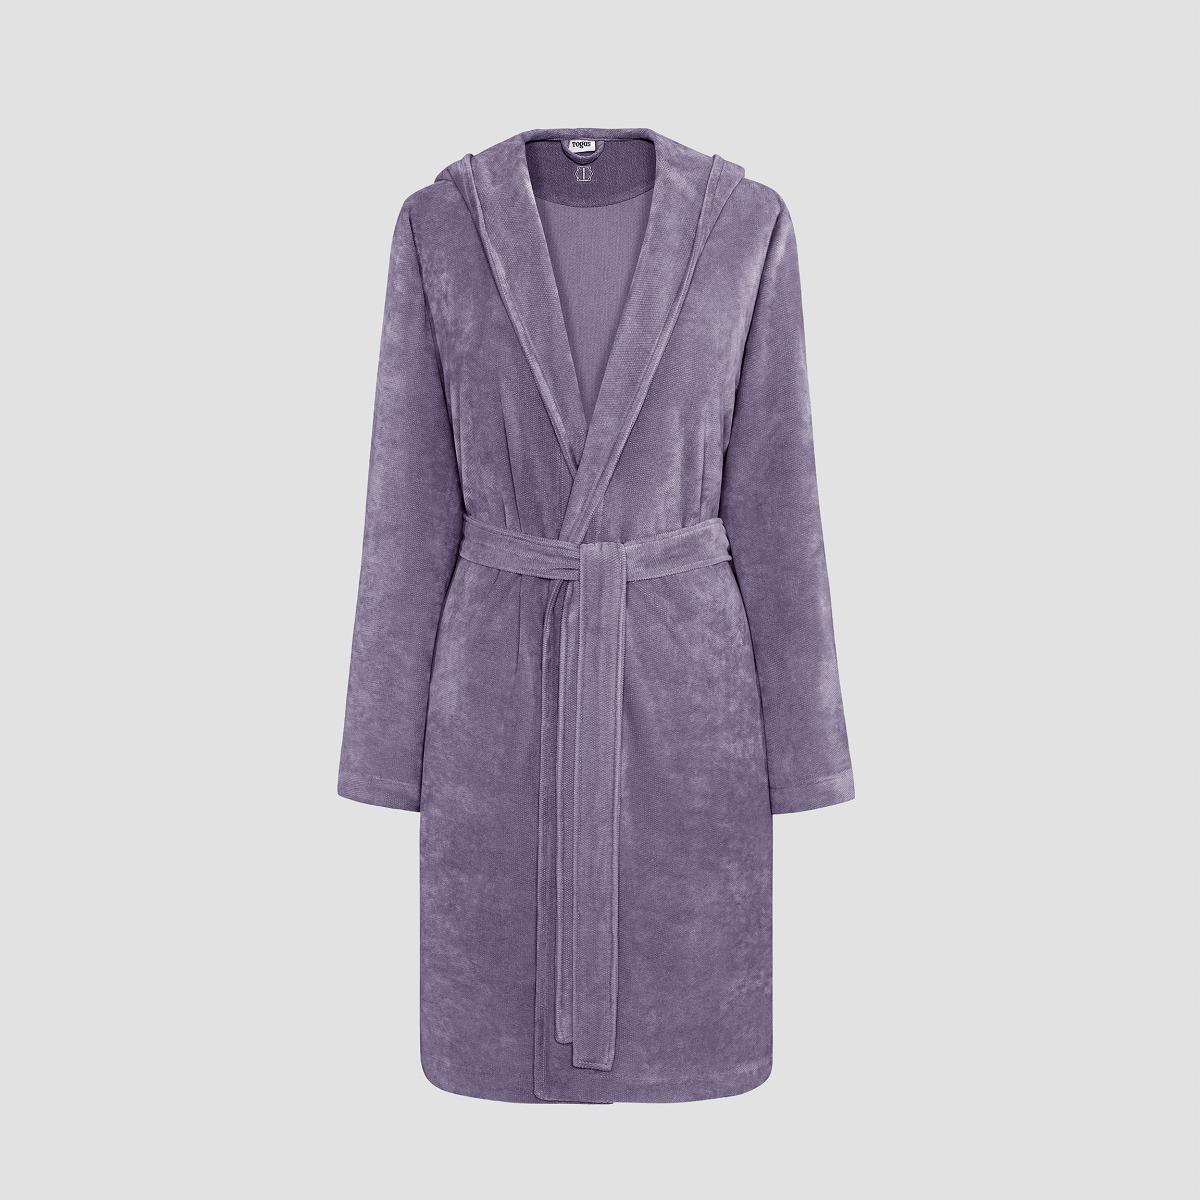 Халат Togas Талия фиолетовый XL(50) жен халат сабрина фиолетовый р 60